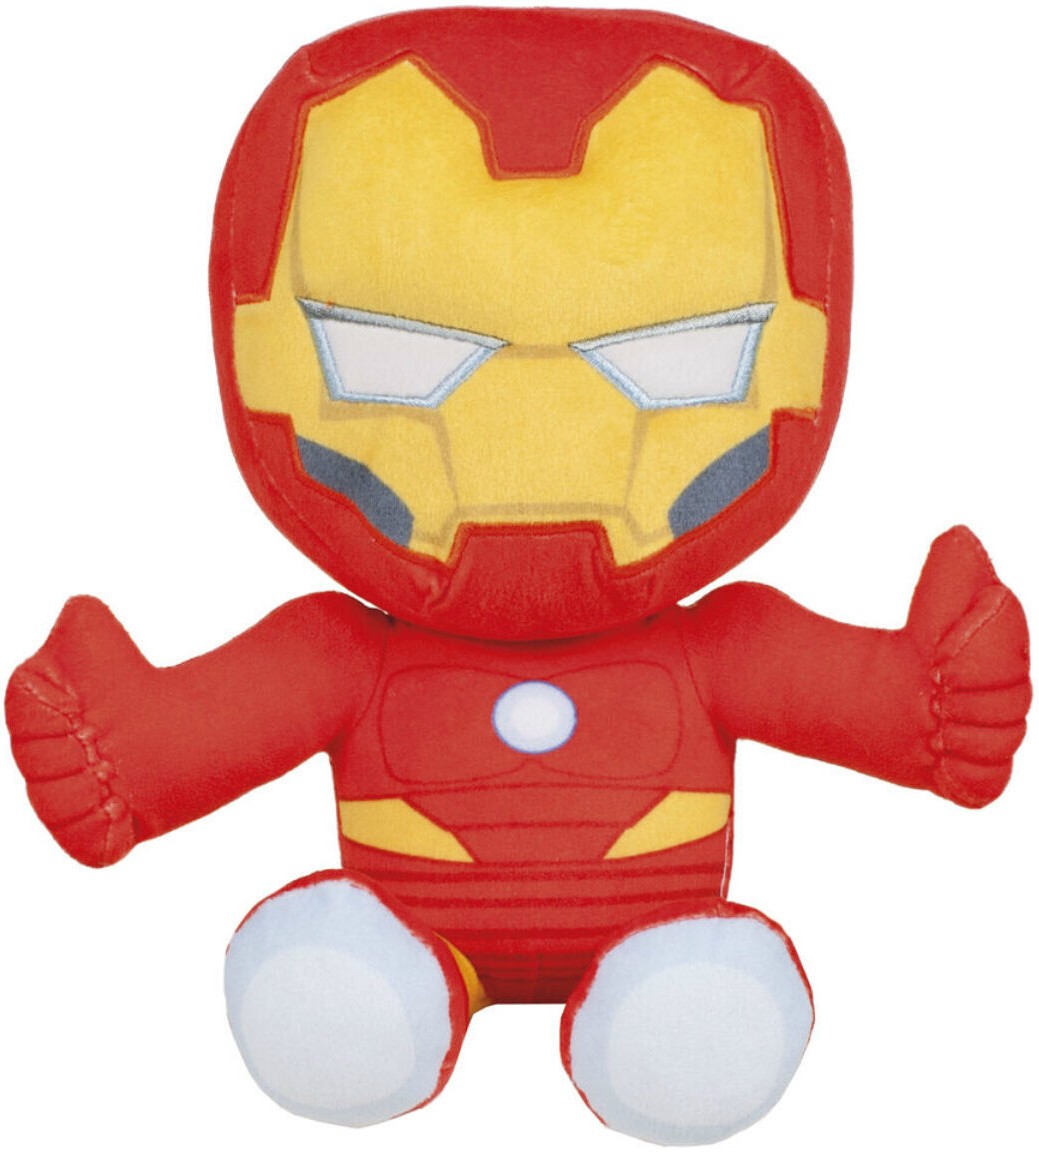 Avengers Iron Man - 30cm